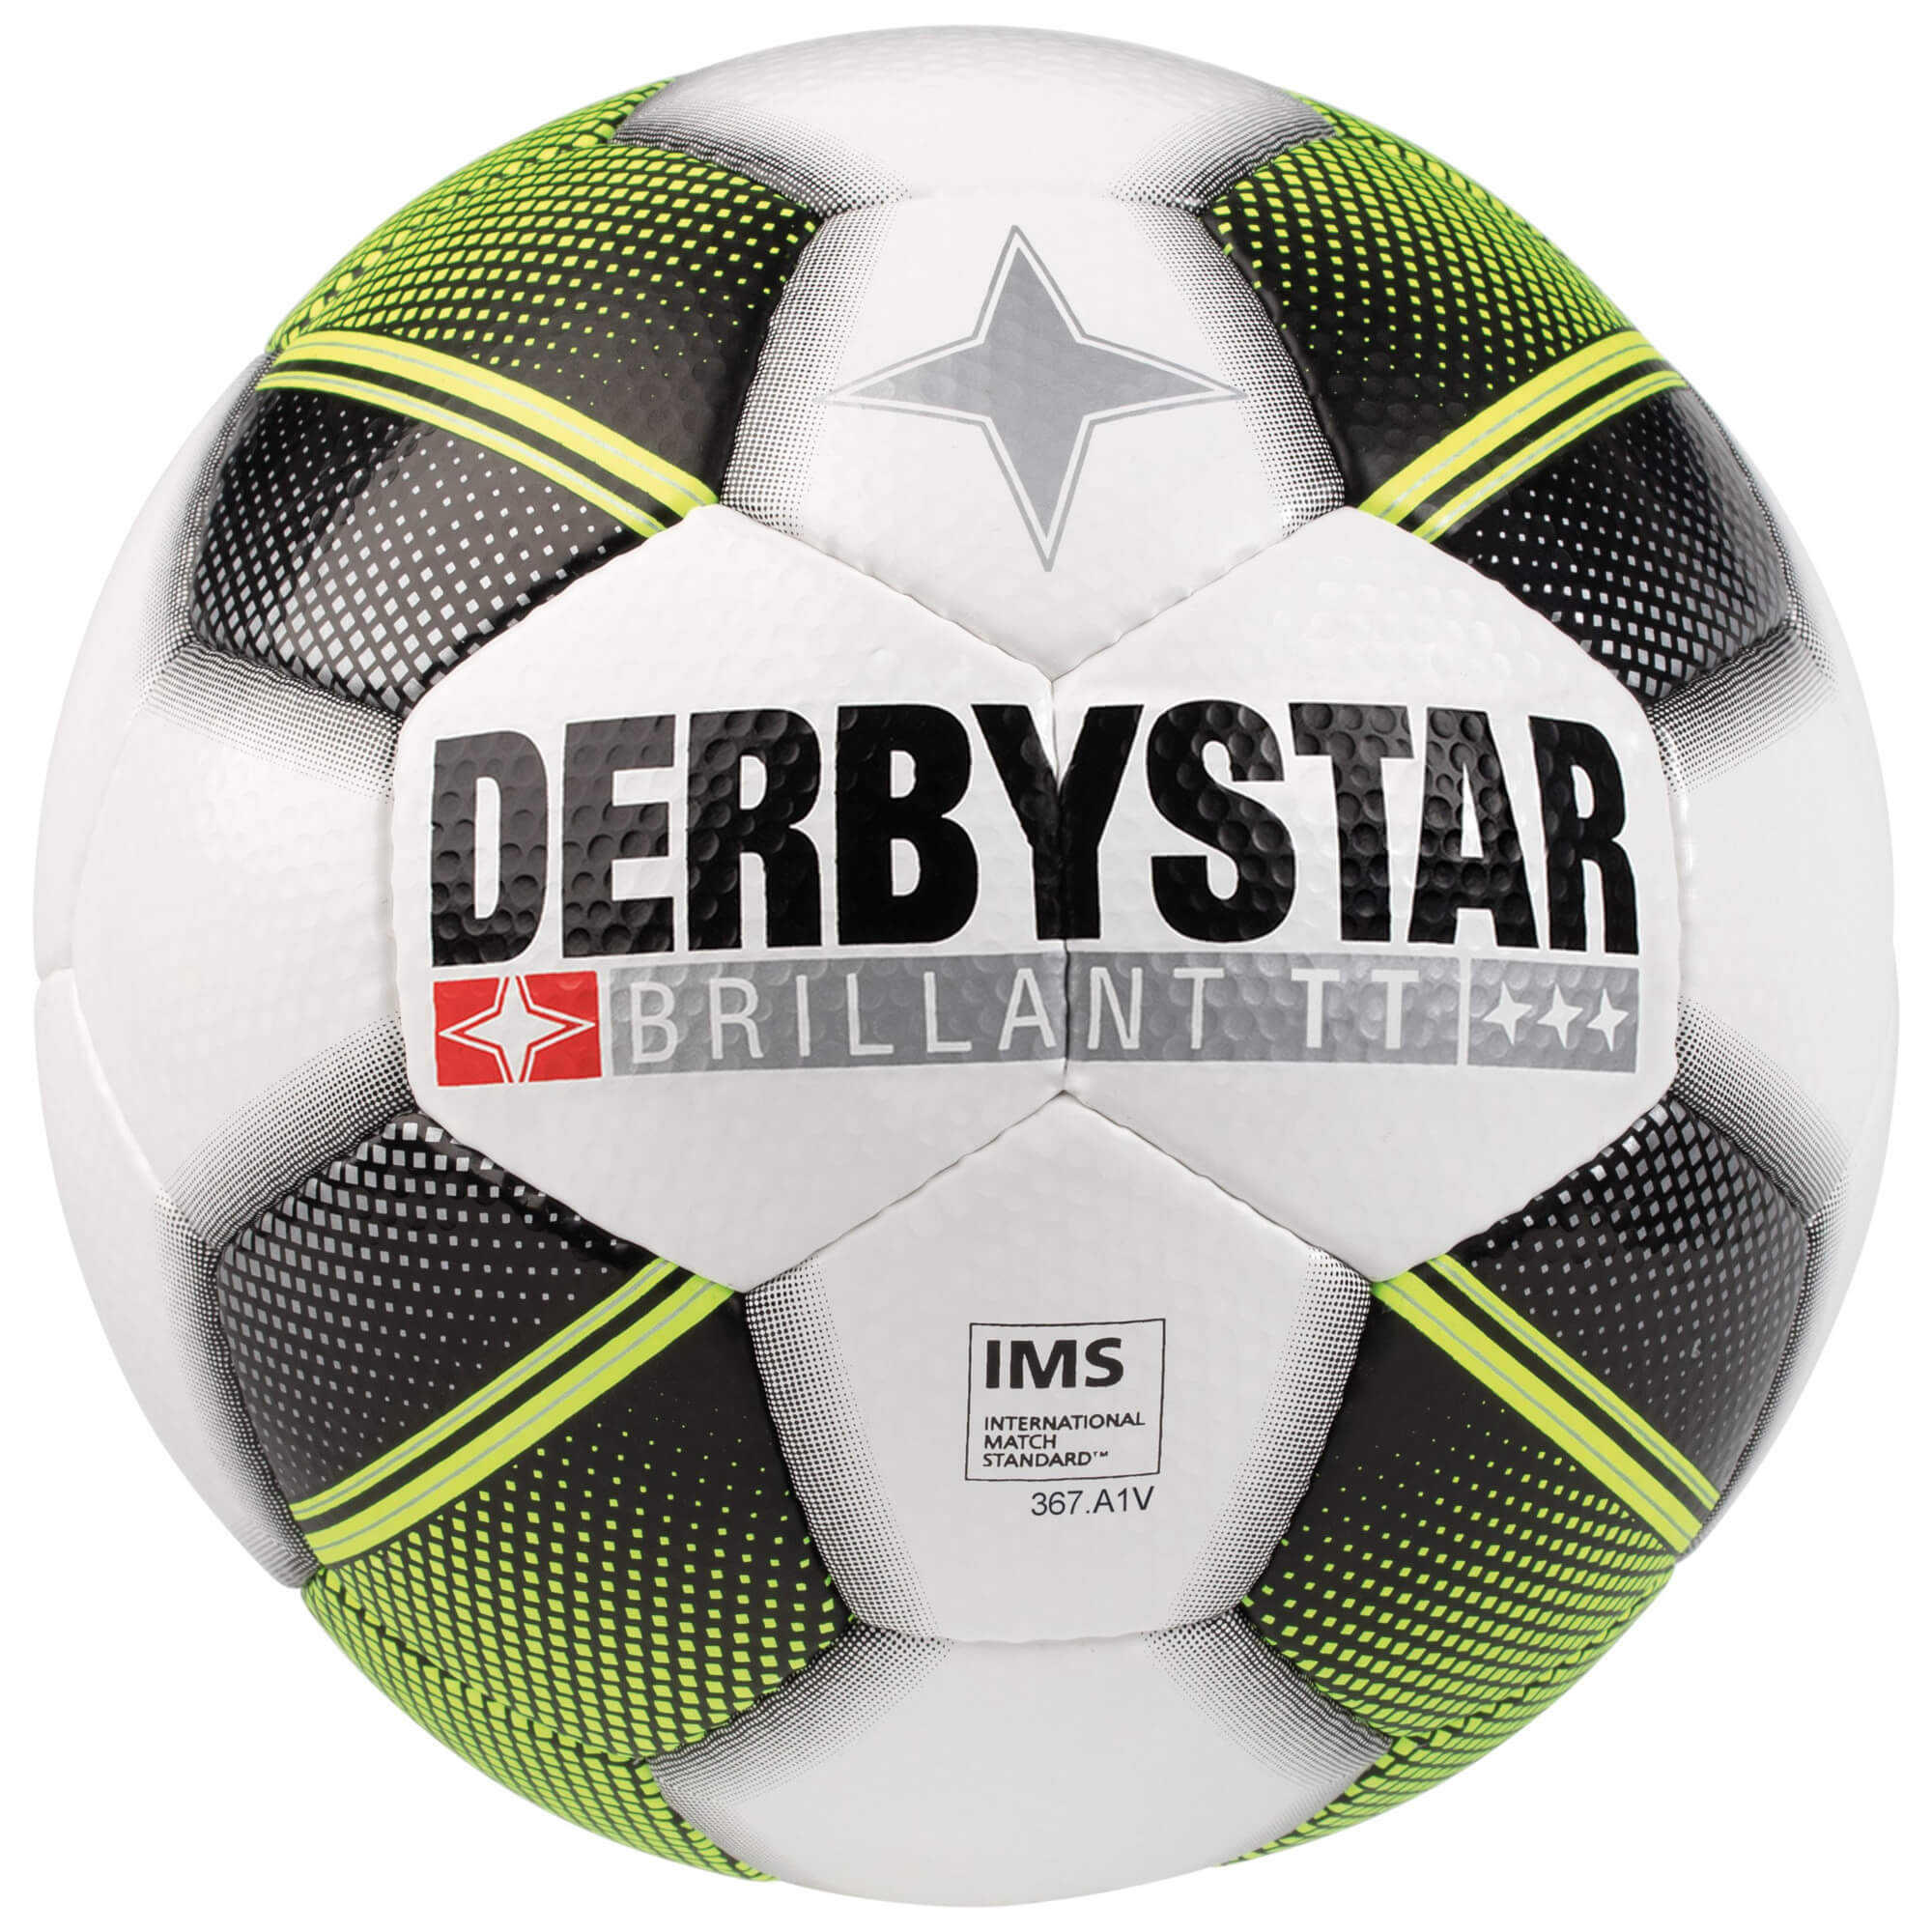 Derbystar Fußball Brillant TT HS, Größe 5 | Vision sports ...